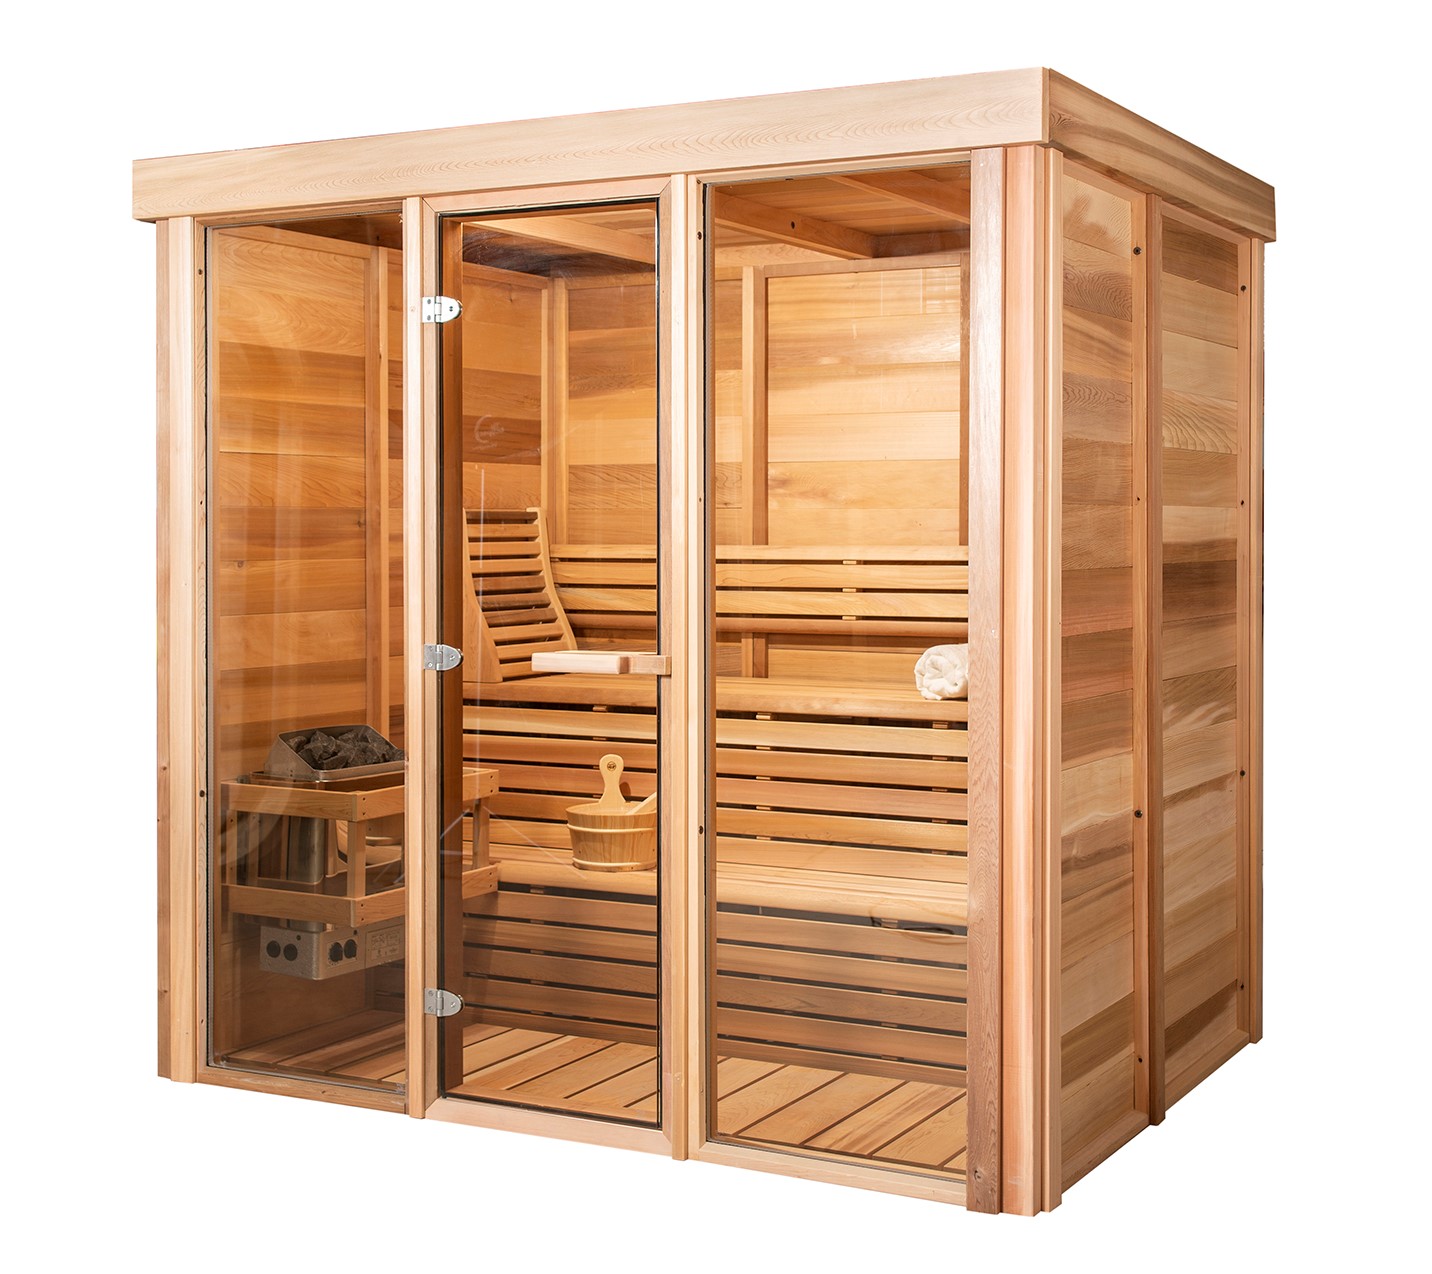 Indoor Pure Vision Saunas (Cube)